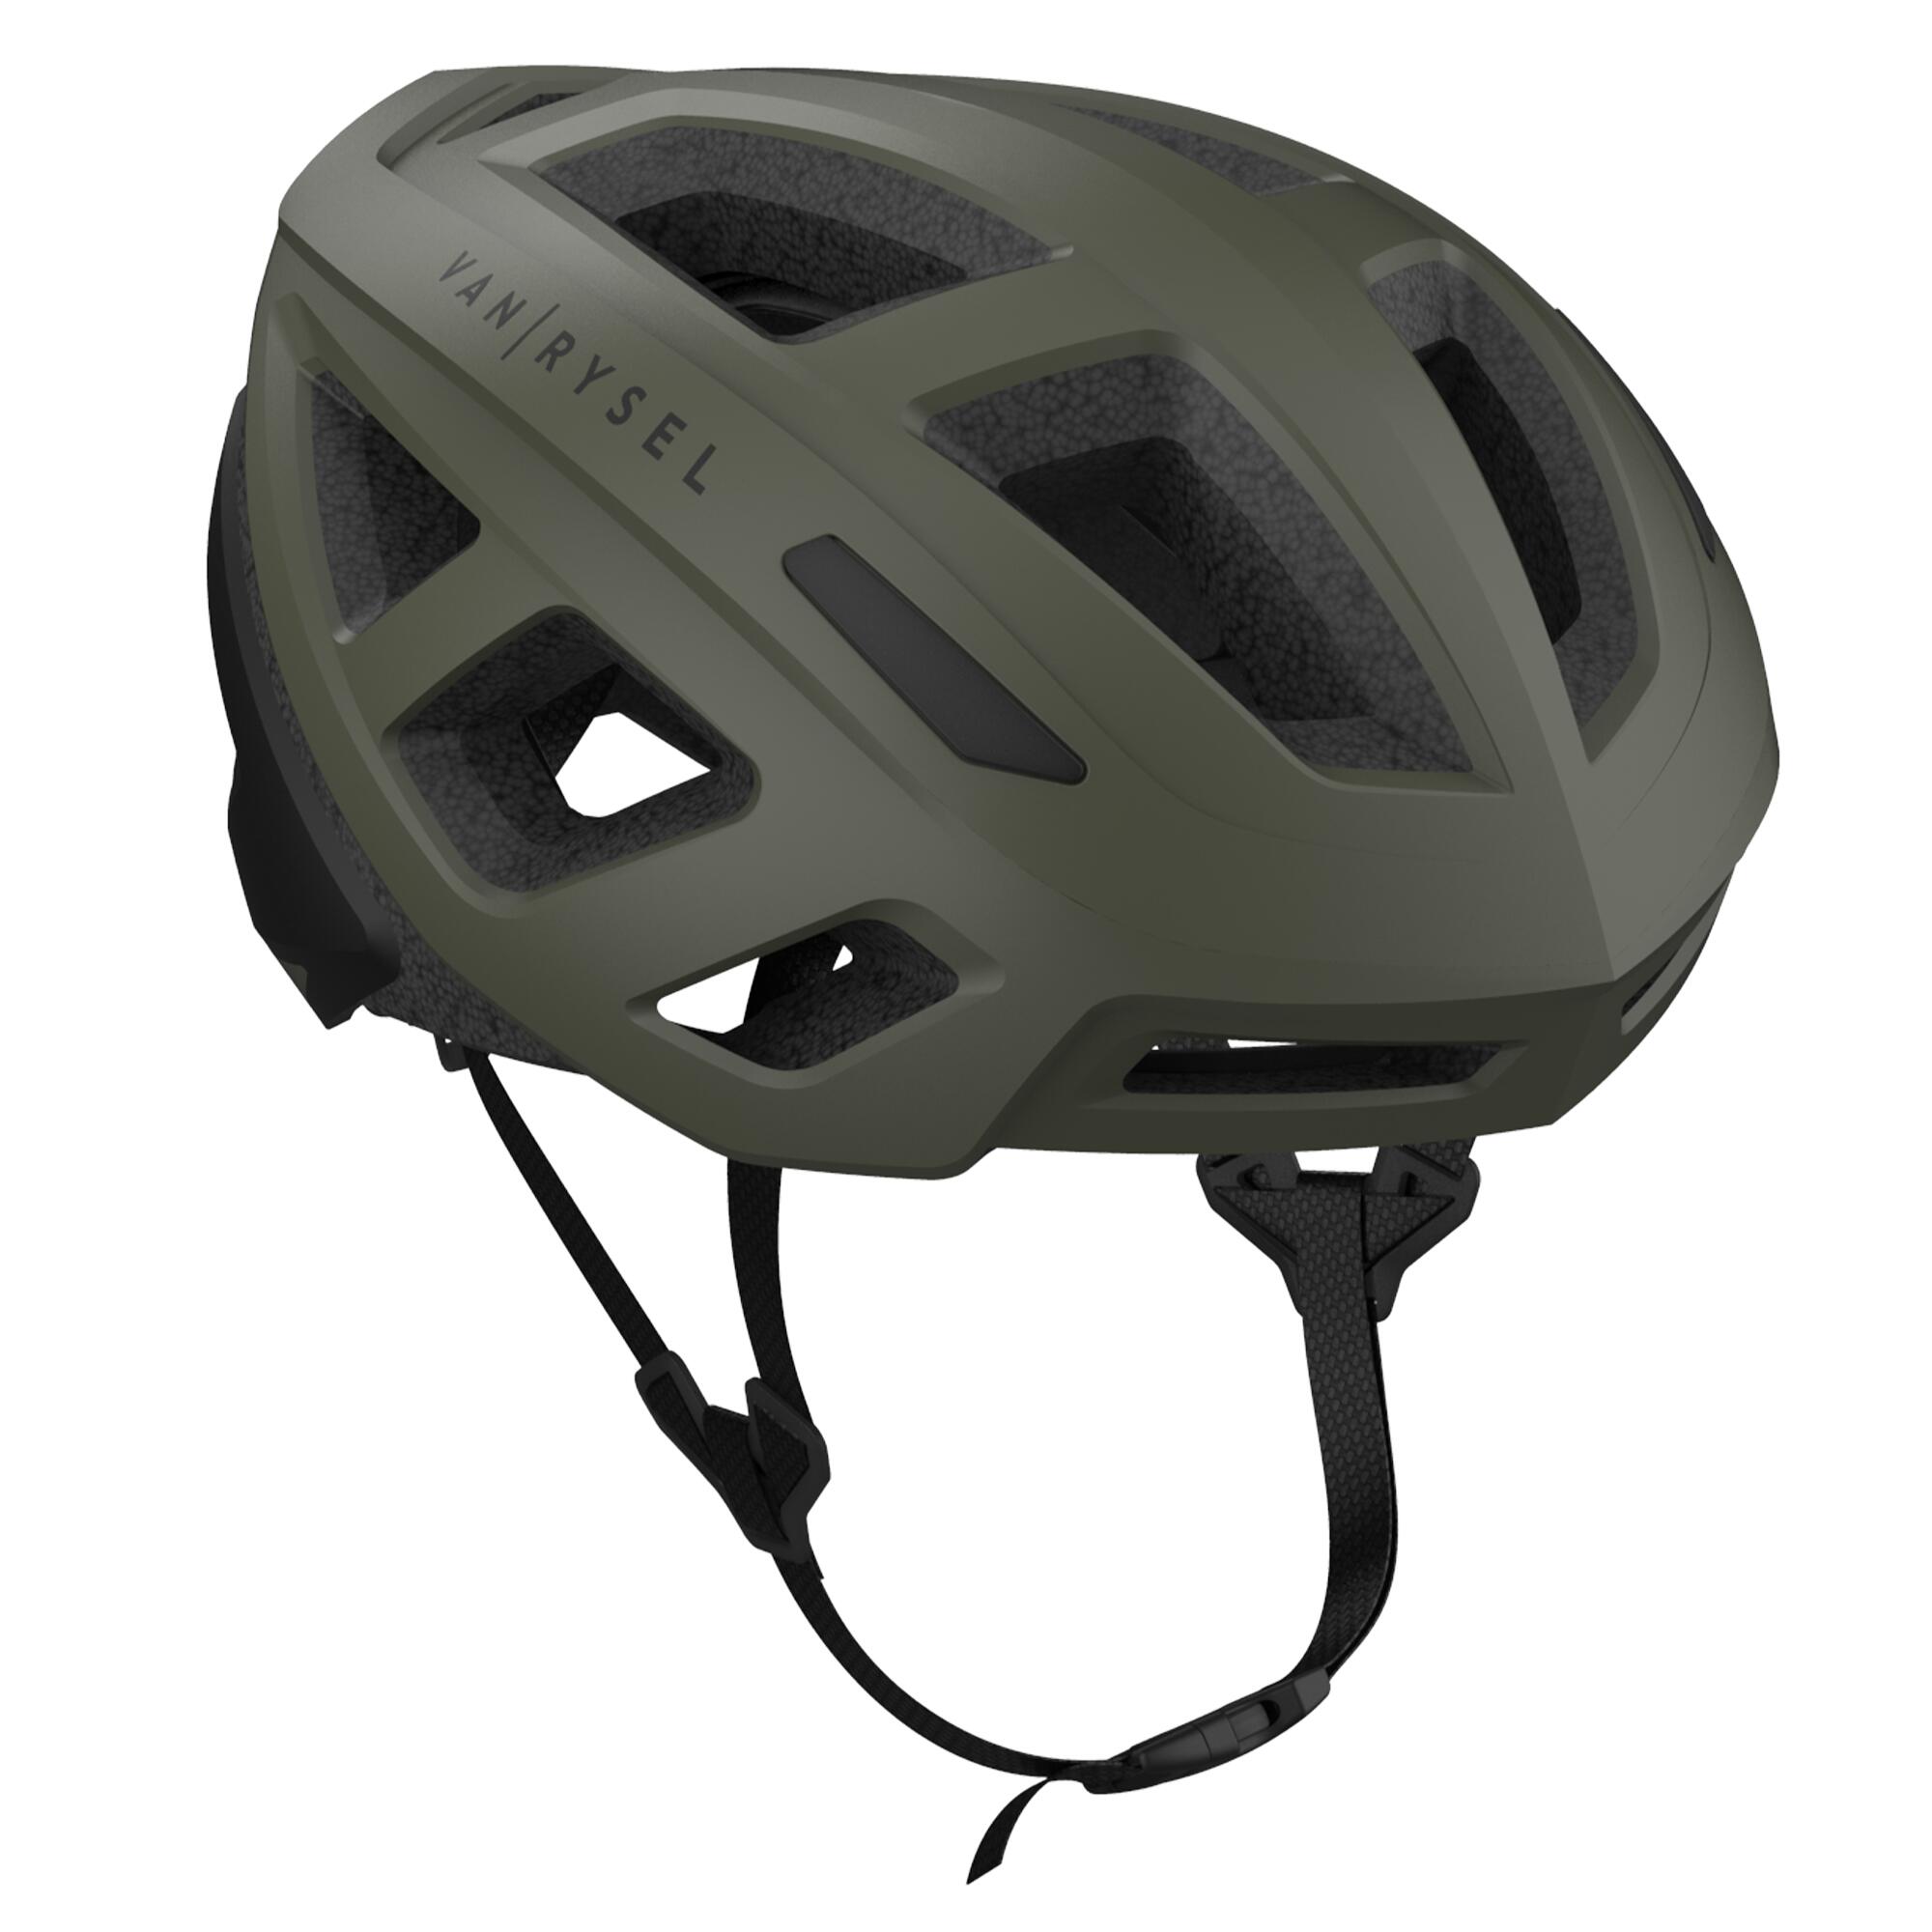 VAN RYSEL Road Cycling Helmet RoadR 500 - Khaki